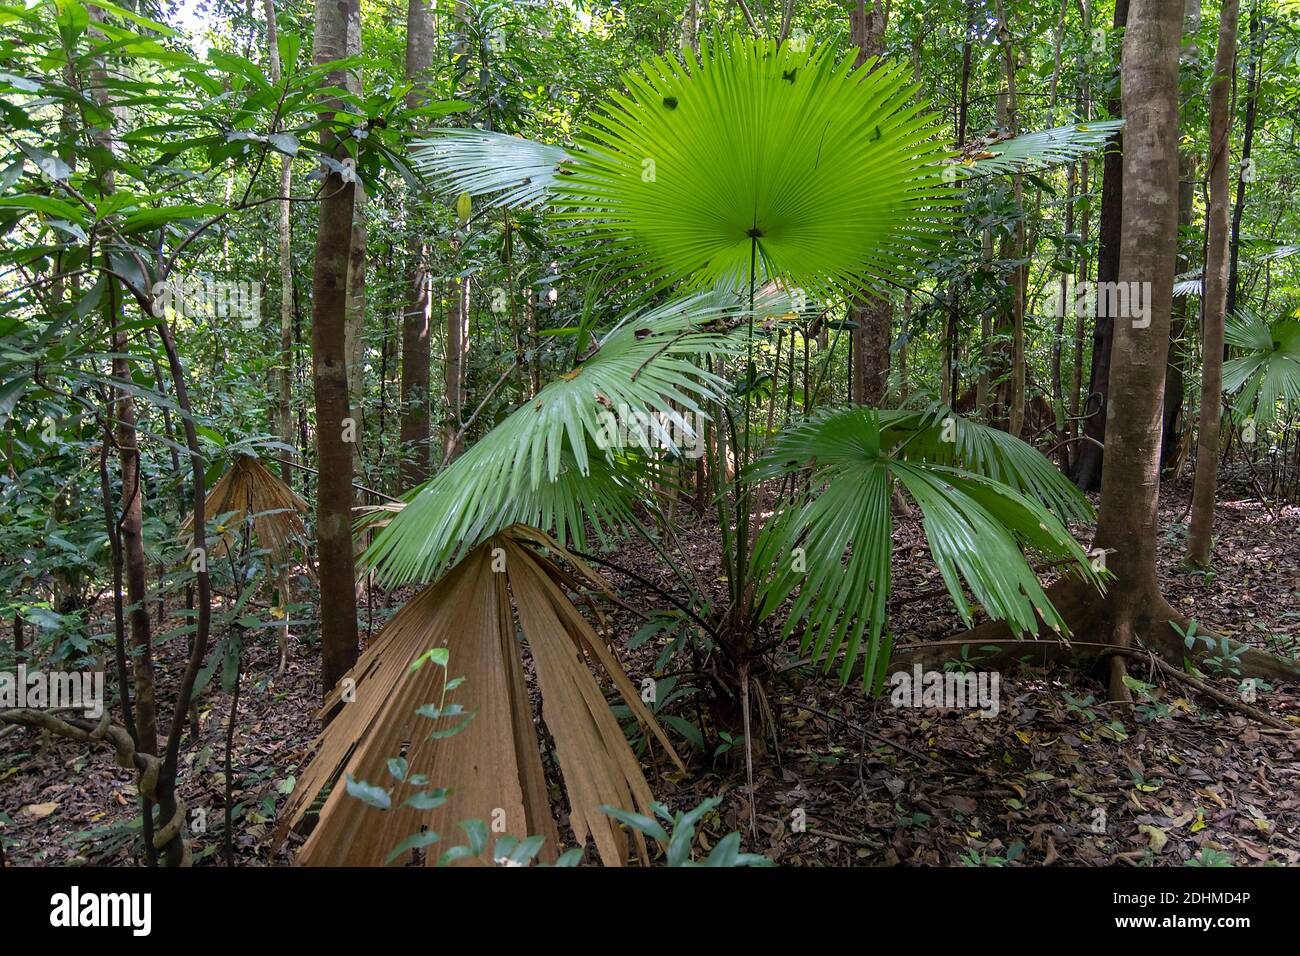 Round-leaf fountain palm (Saribus rotundifolius) from Tangkoko National Park, northern Sulawesi, Indonesia Stock Photo